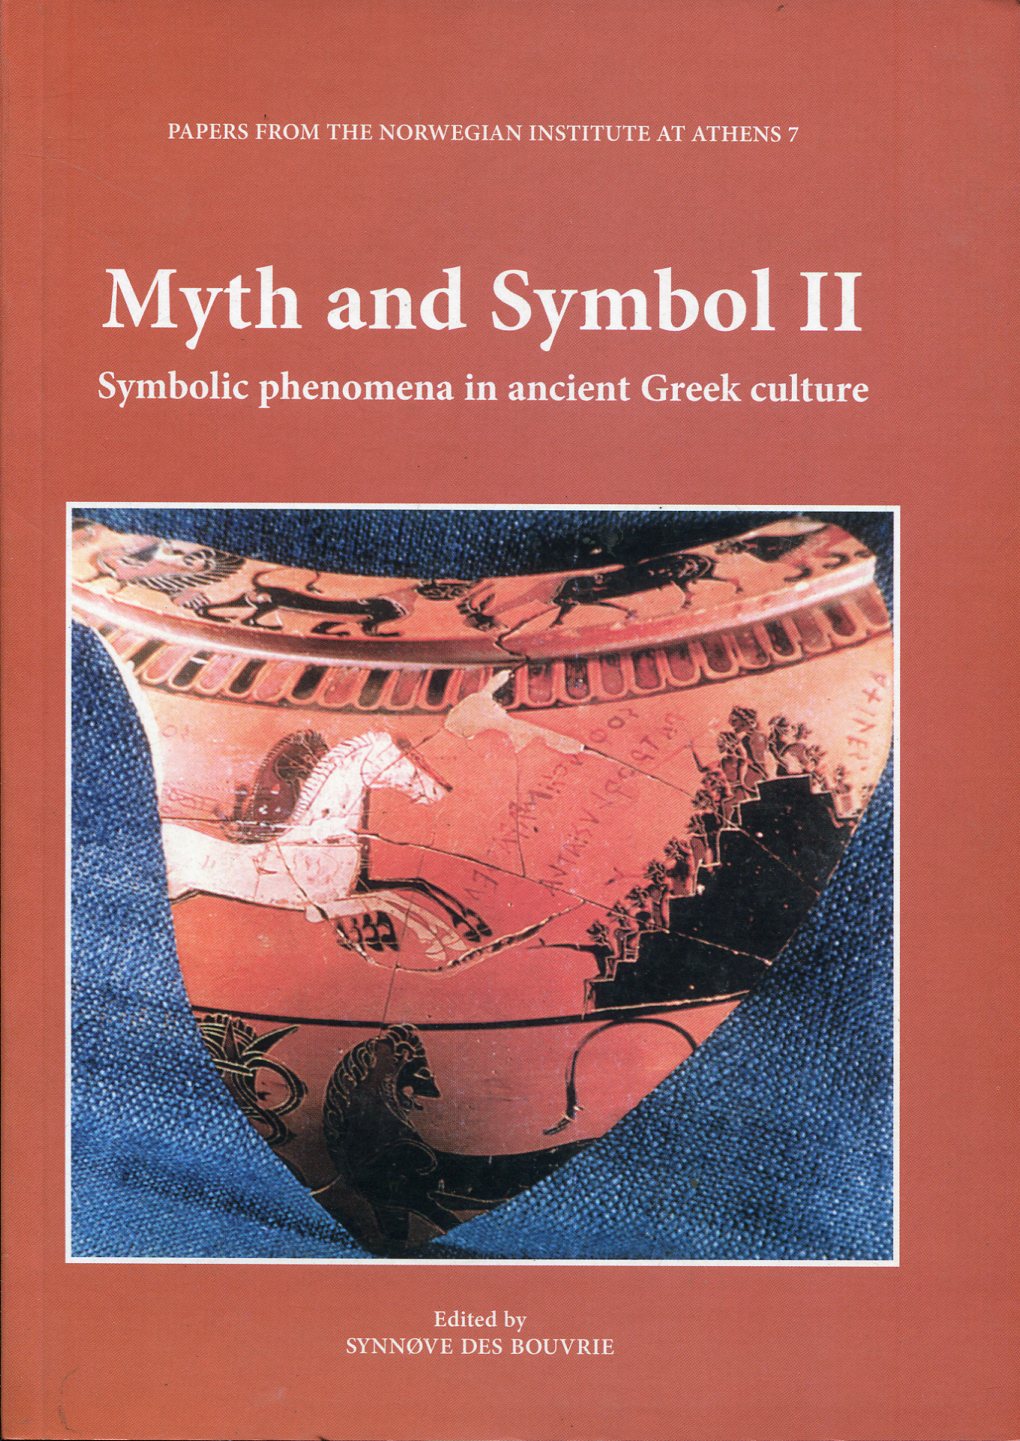 MYTH AND SYMBOL II